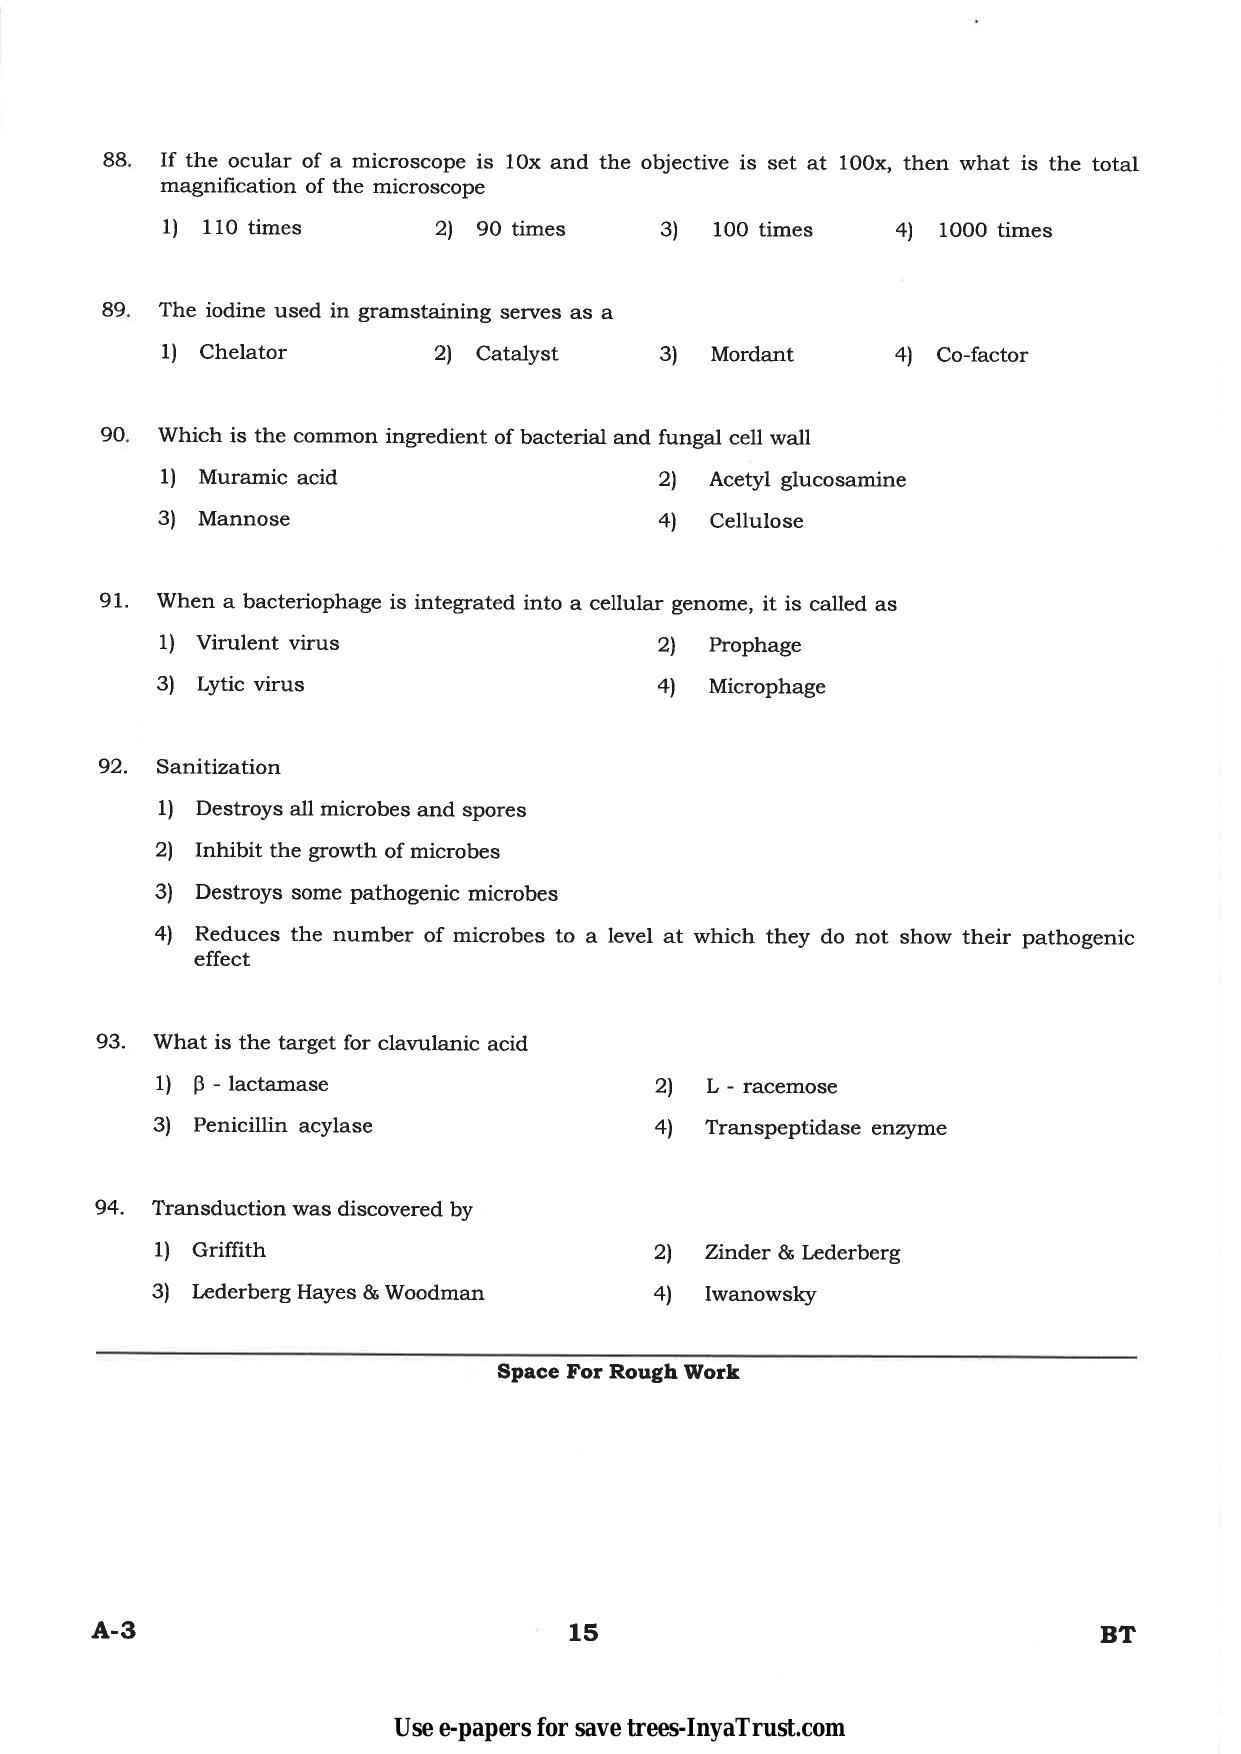 Karnataka Diploma CET- 2015 Biotechnology Question Paper - Page 15